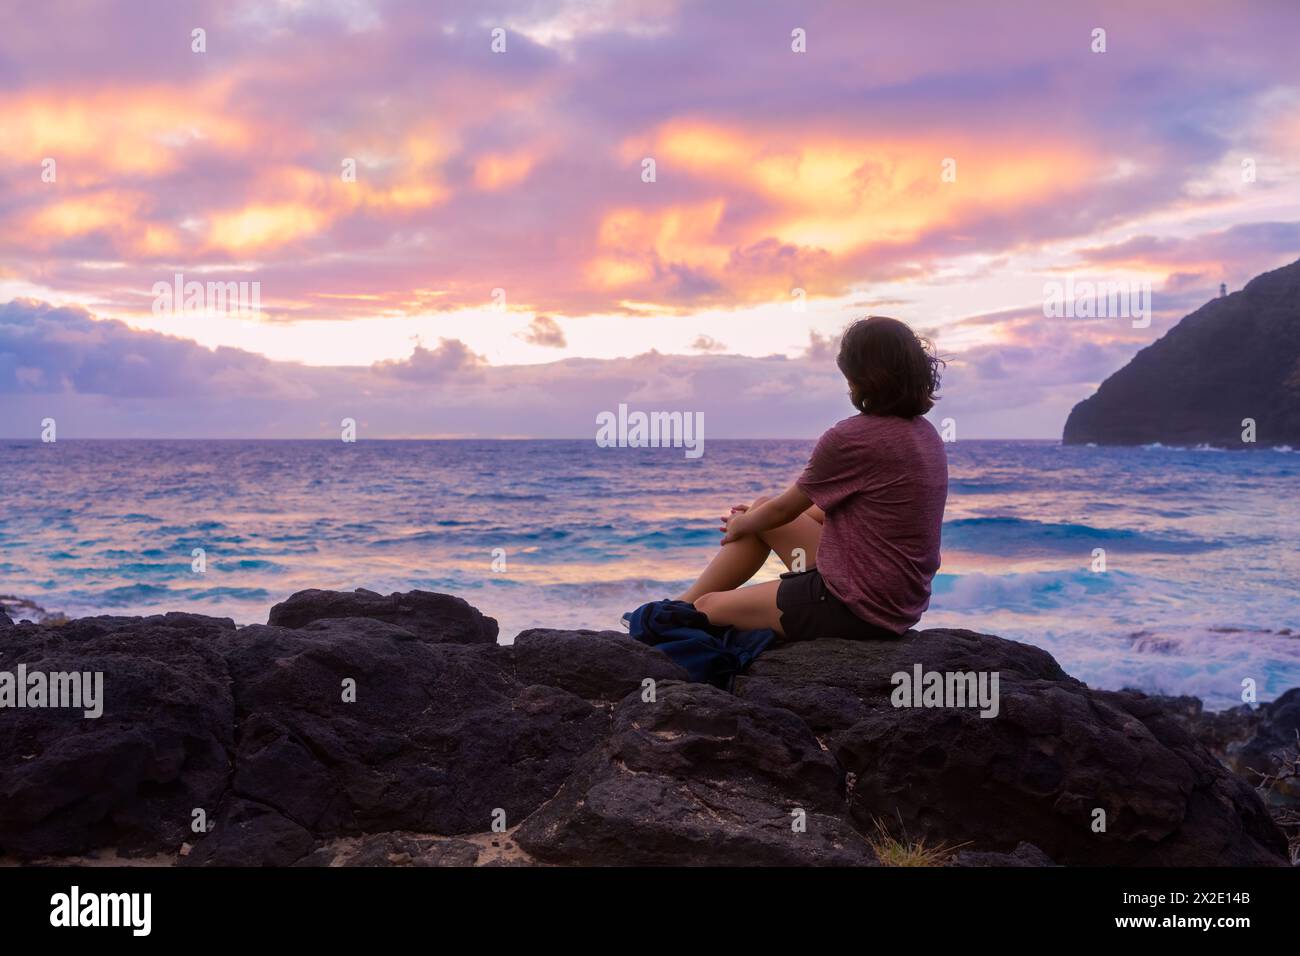 Young woman sitting on rocky beach watching the sun rise over the Hawaiian ocean at Makapu'u Beach, Oahu Stock Photo